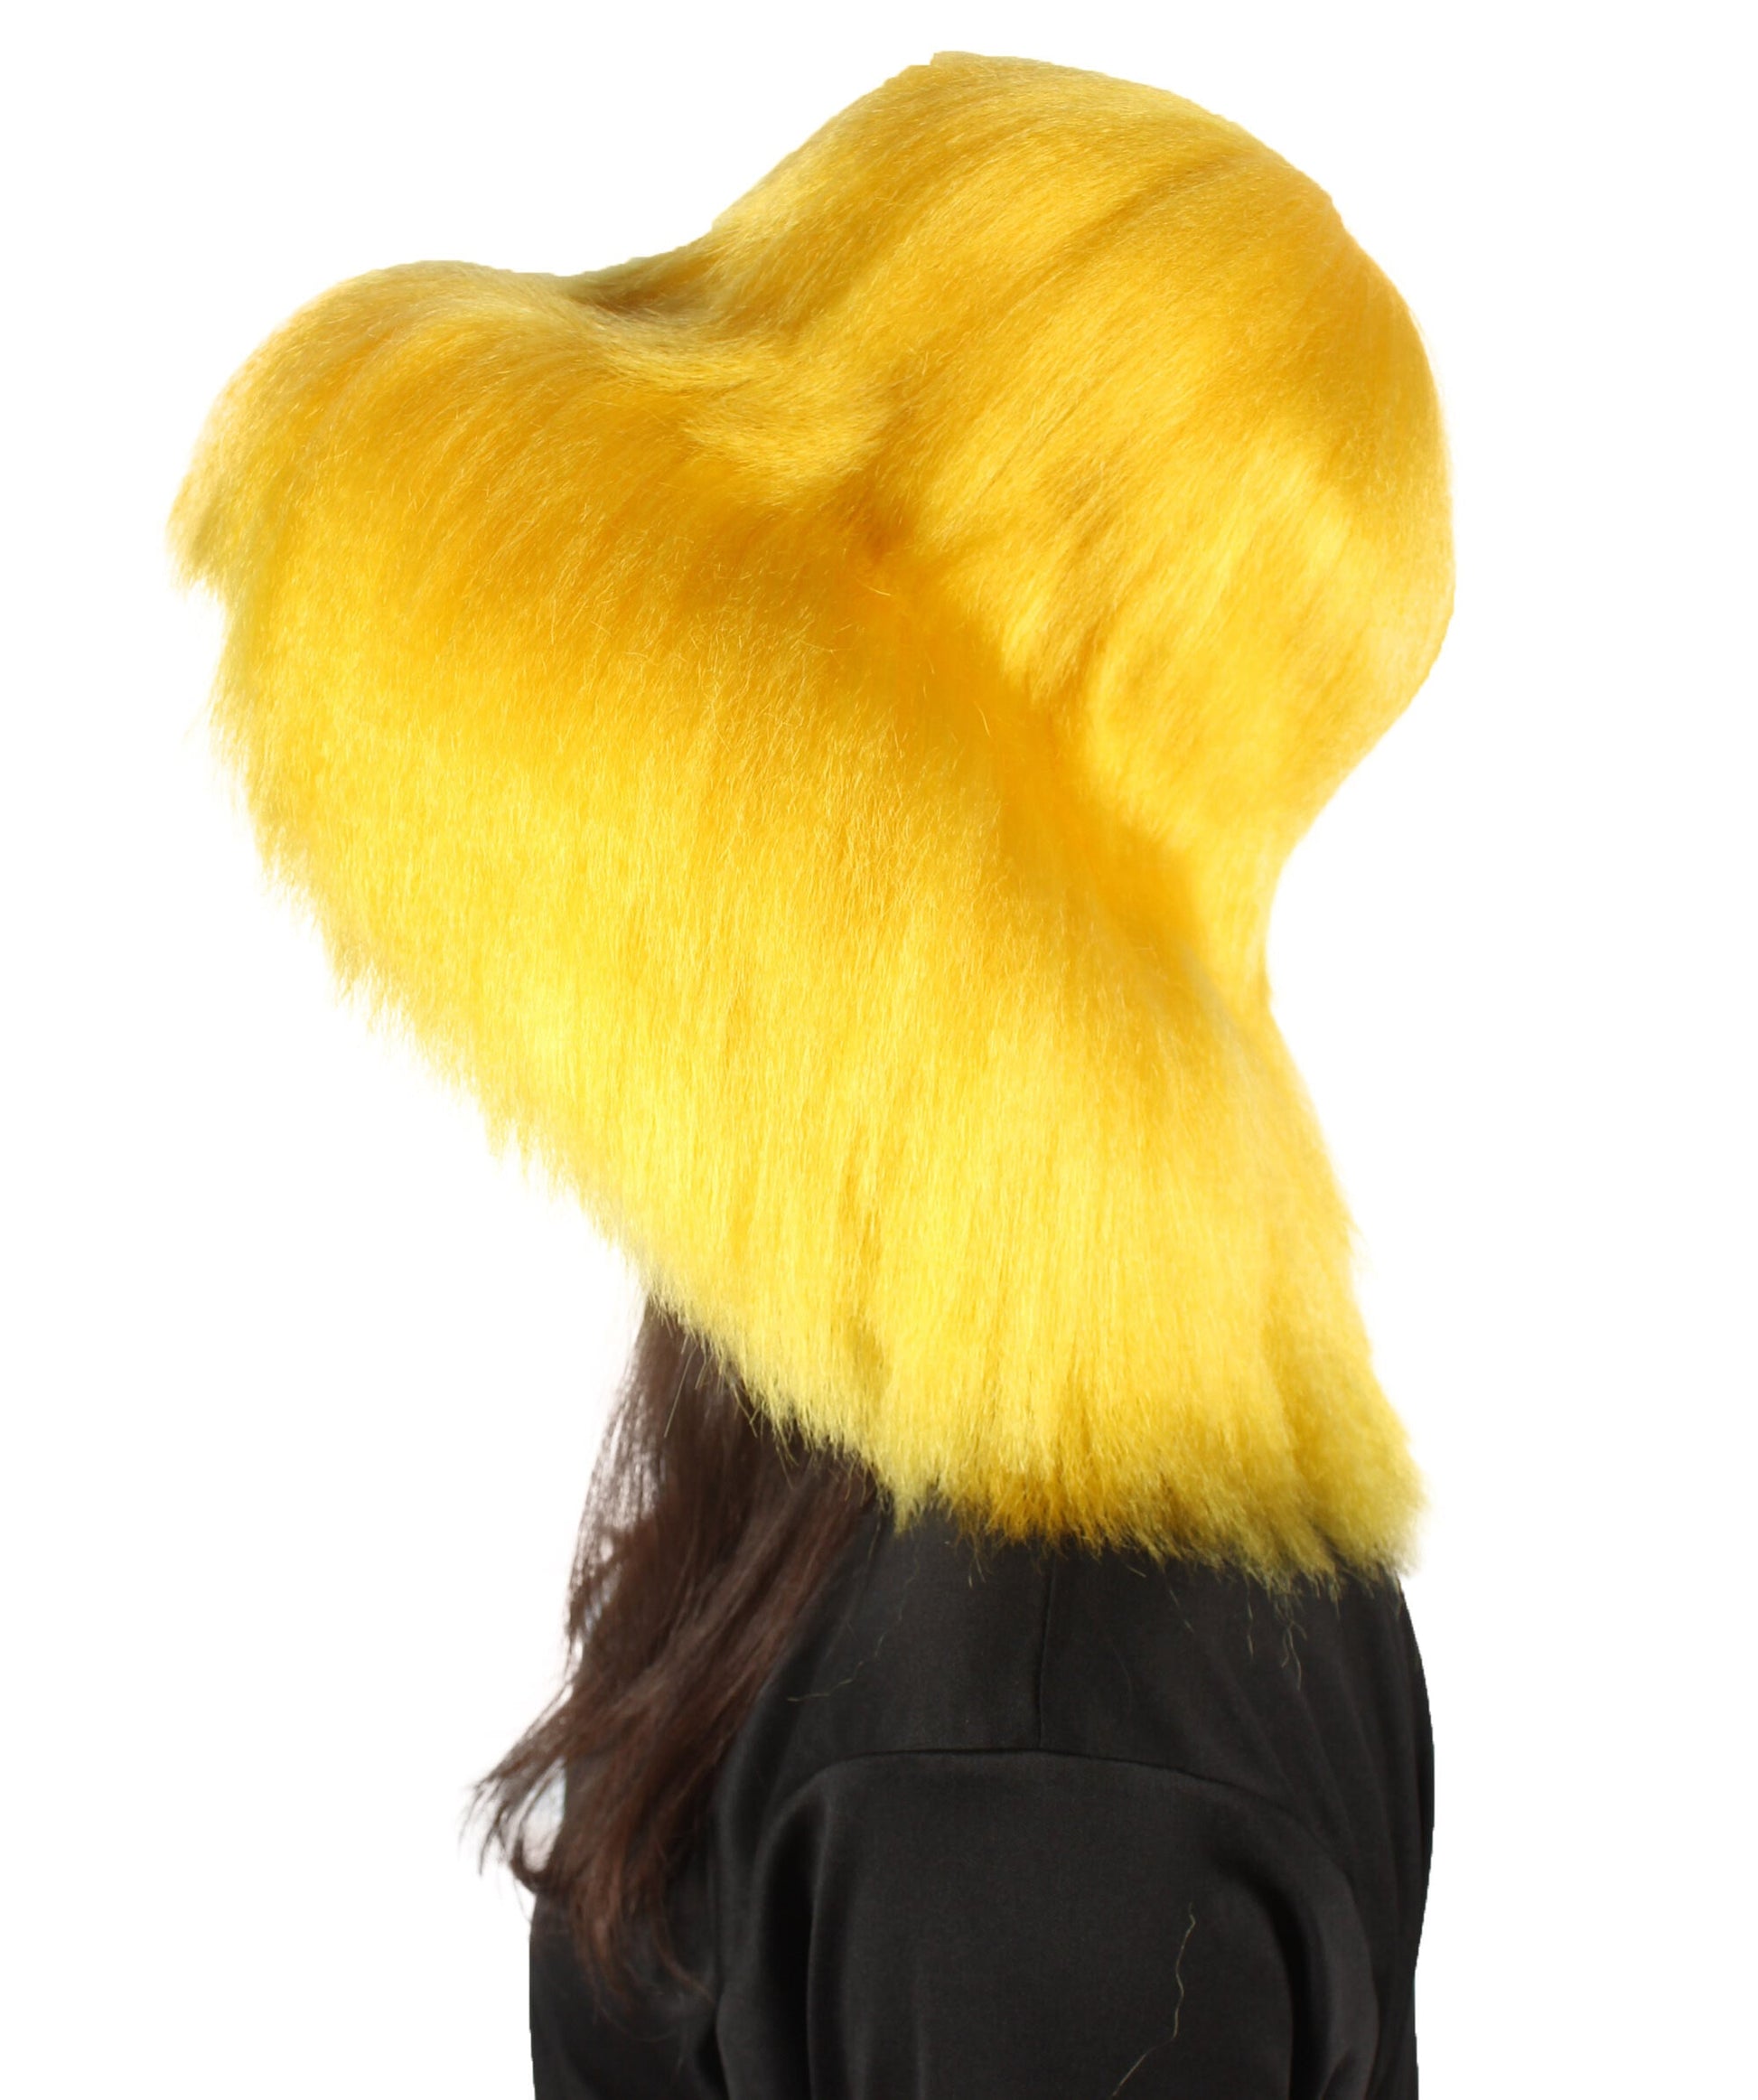 Unisex Multicolor Option Furry Bucket Hat Cosplay AccessoryYellow  Unisex Multicolor Option Furry Bucket Hat Cosplay Accessory,